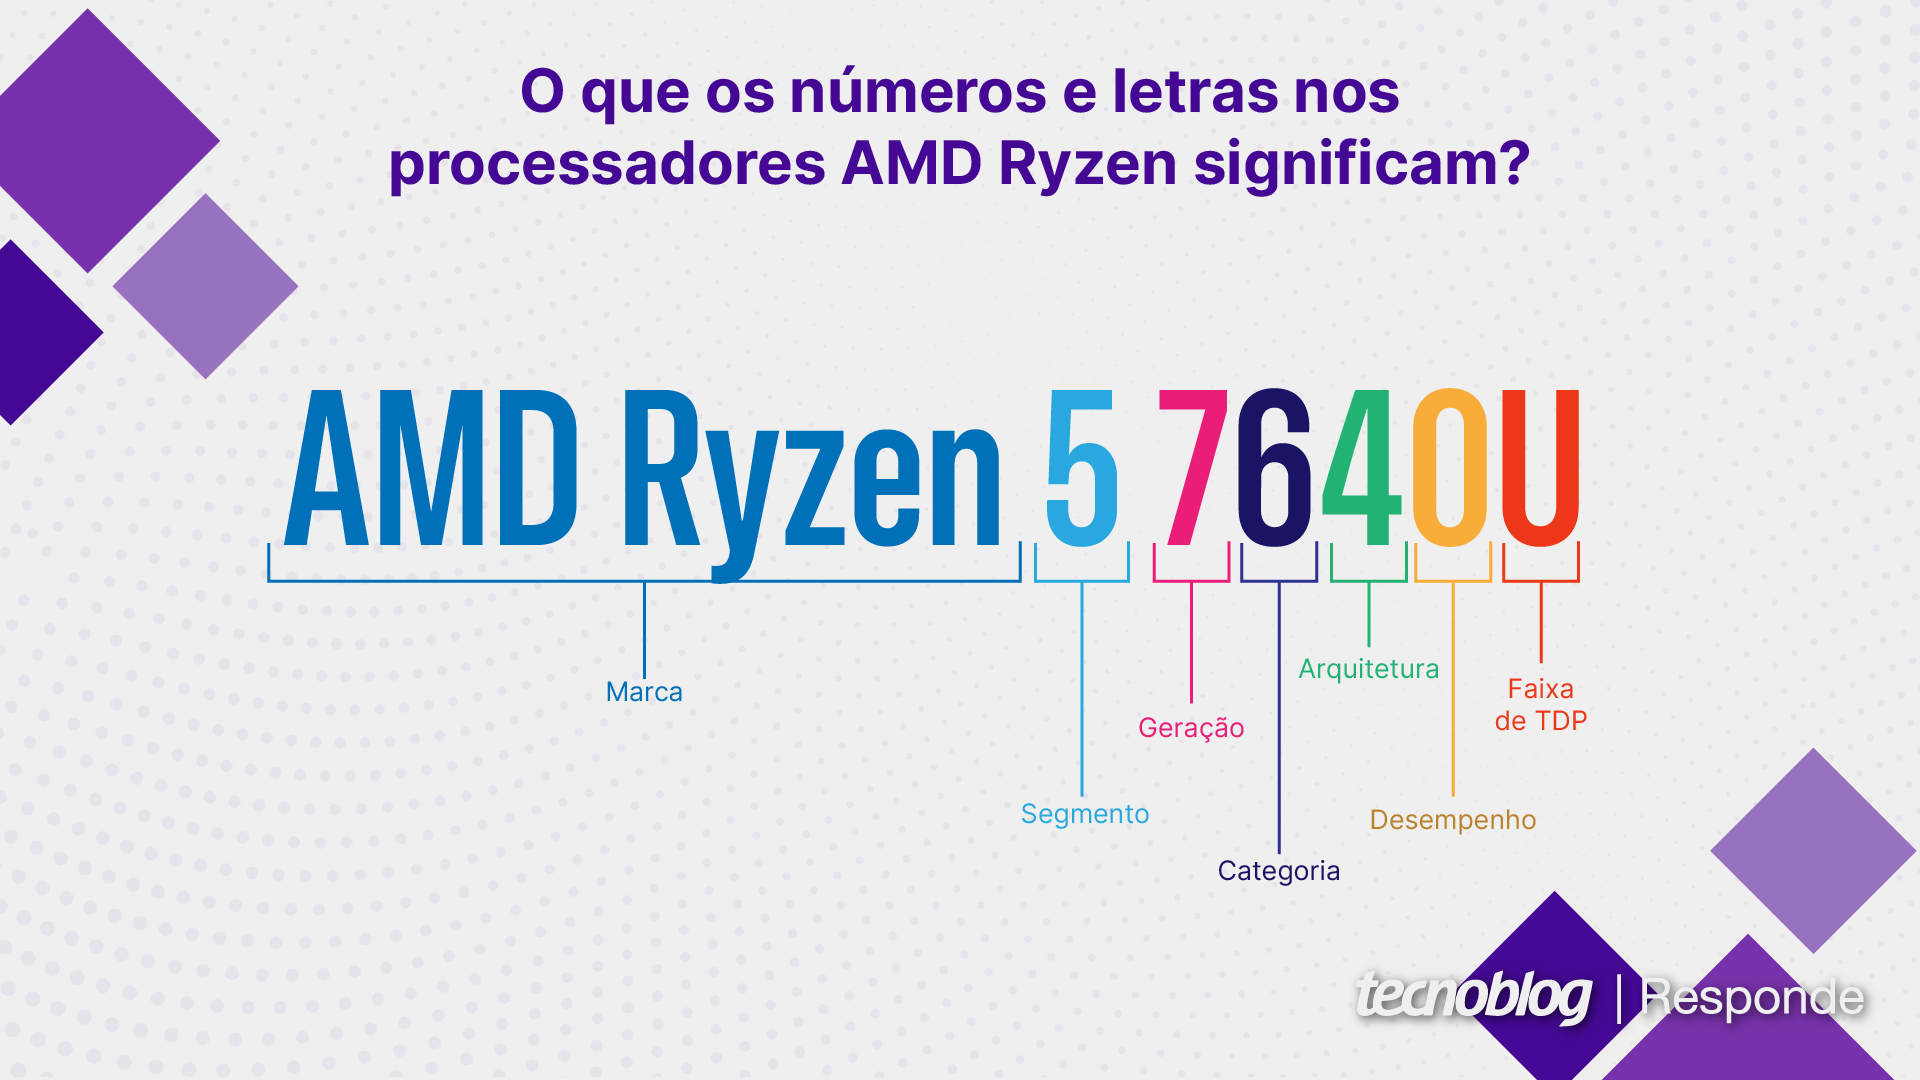 Review: AMD Ryzen 7 esquenta briga de processadores com a Intel